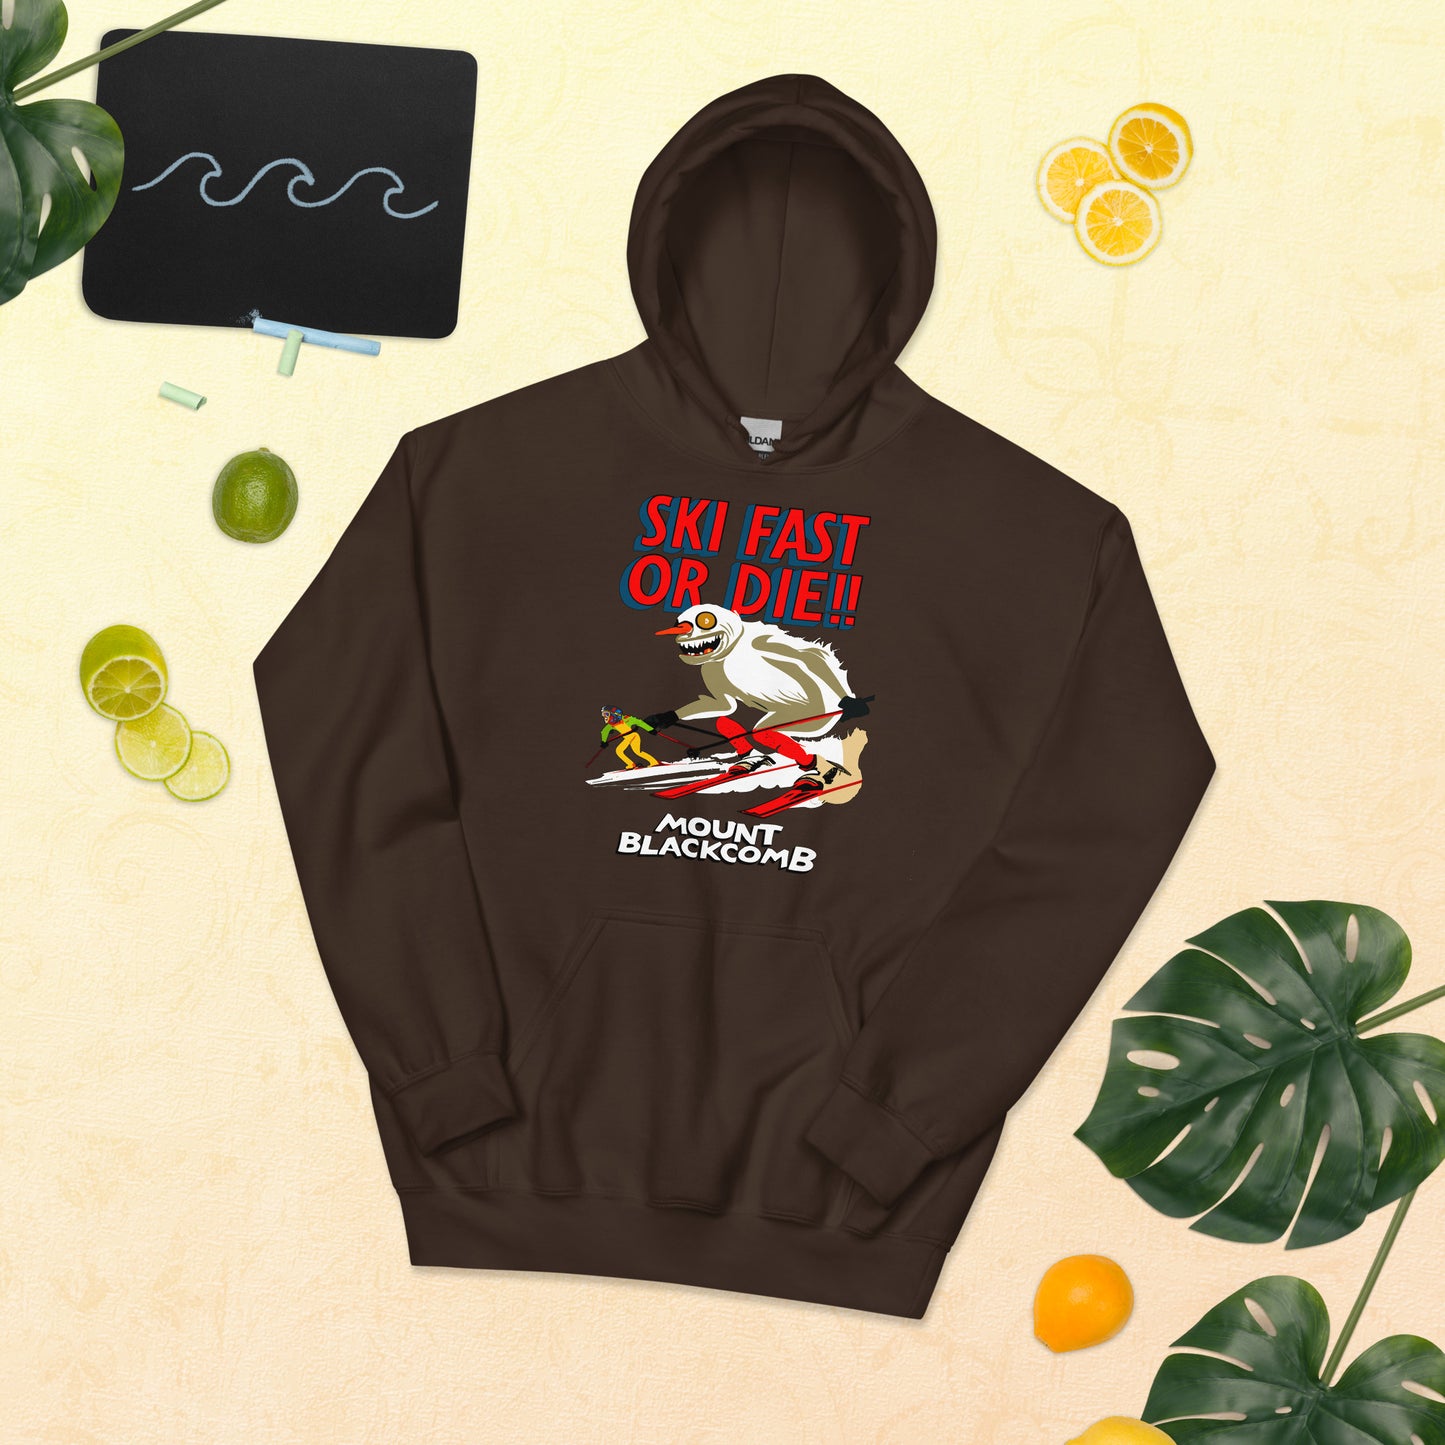 Ski Fast or Die yeti skiing mount blackcomb printed hoodie by whistler shirts